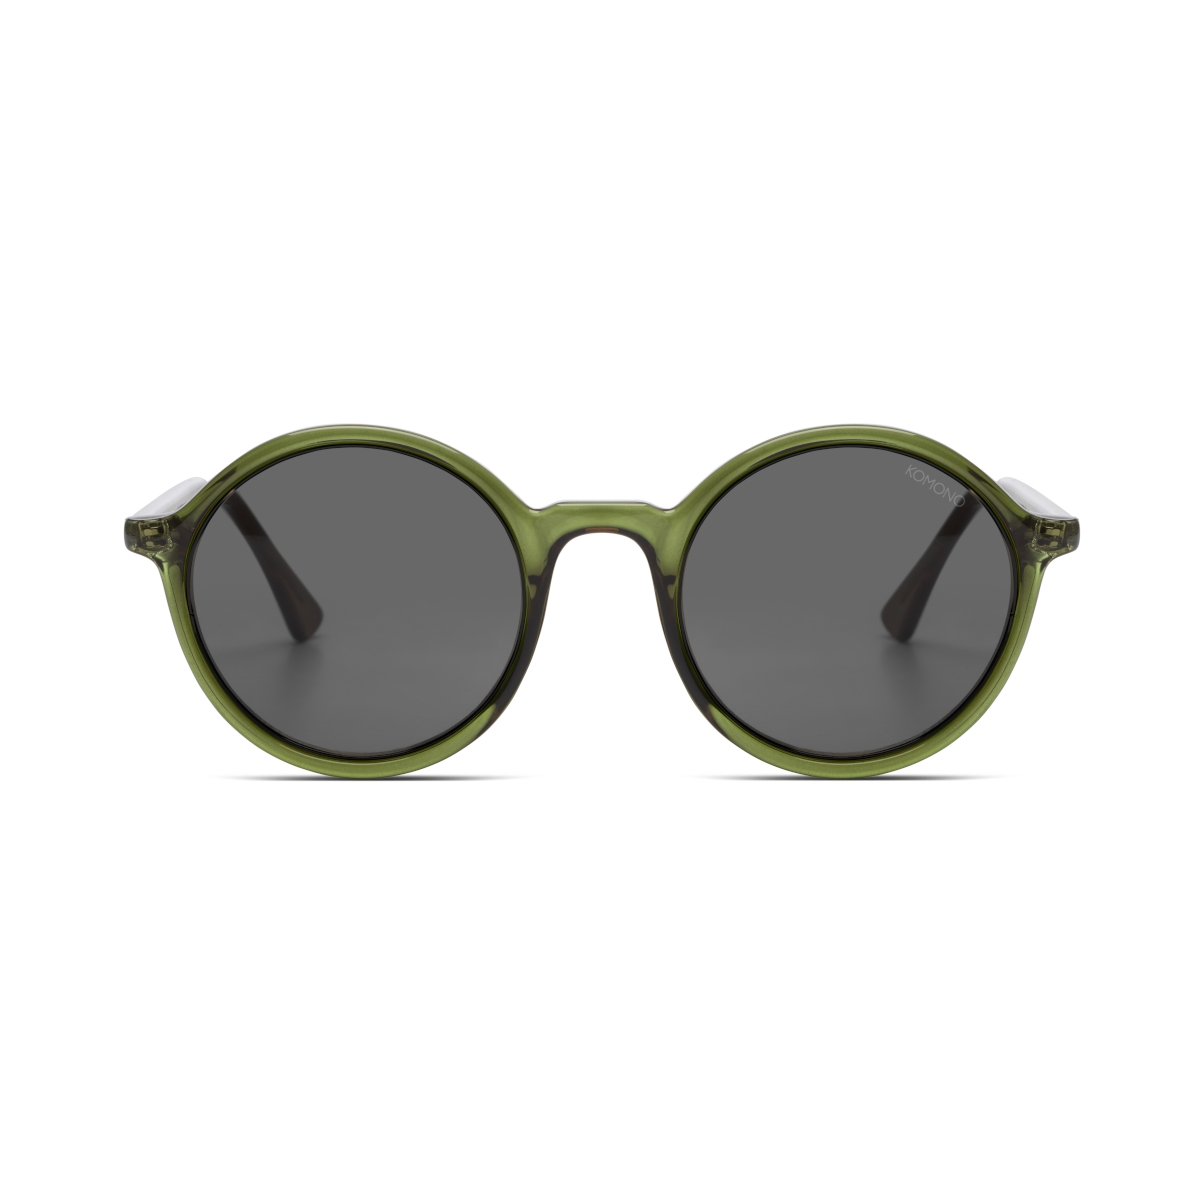 Komono Sunglasses - Στρογγυλά κοκκάλινα γυαλιά - Fern